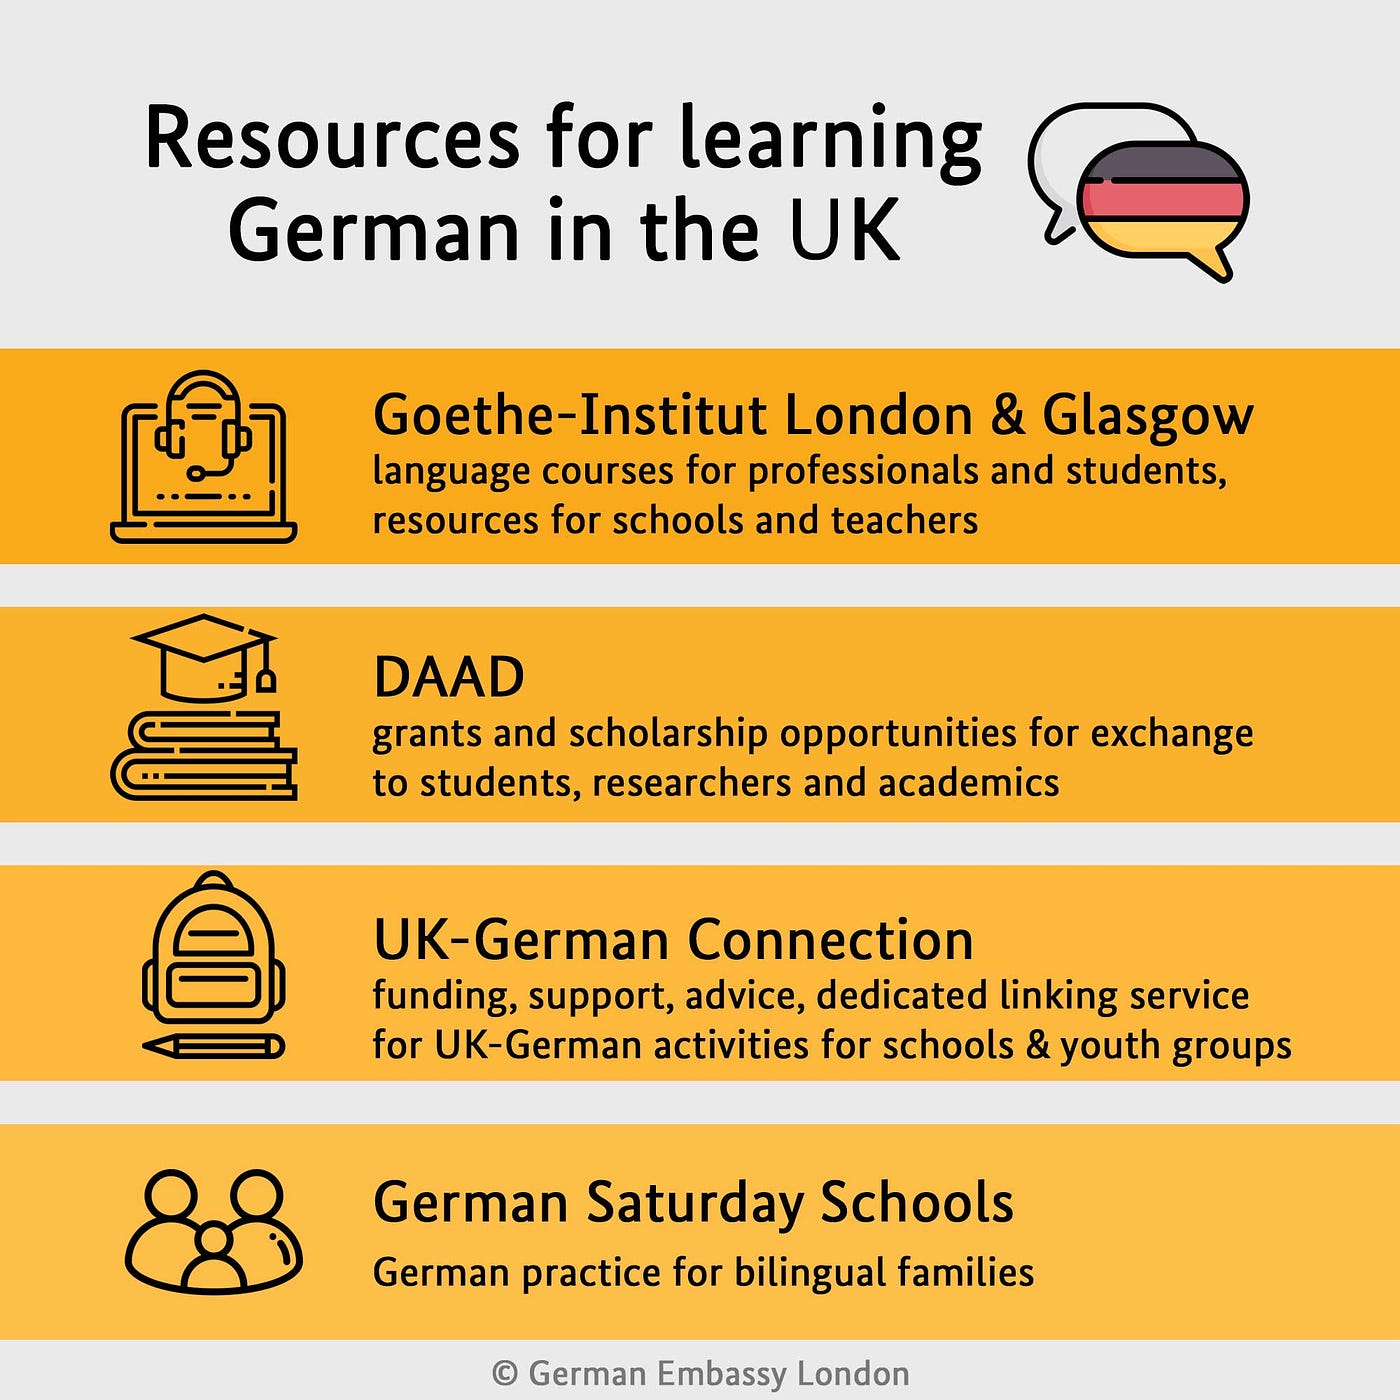 German-Language Support